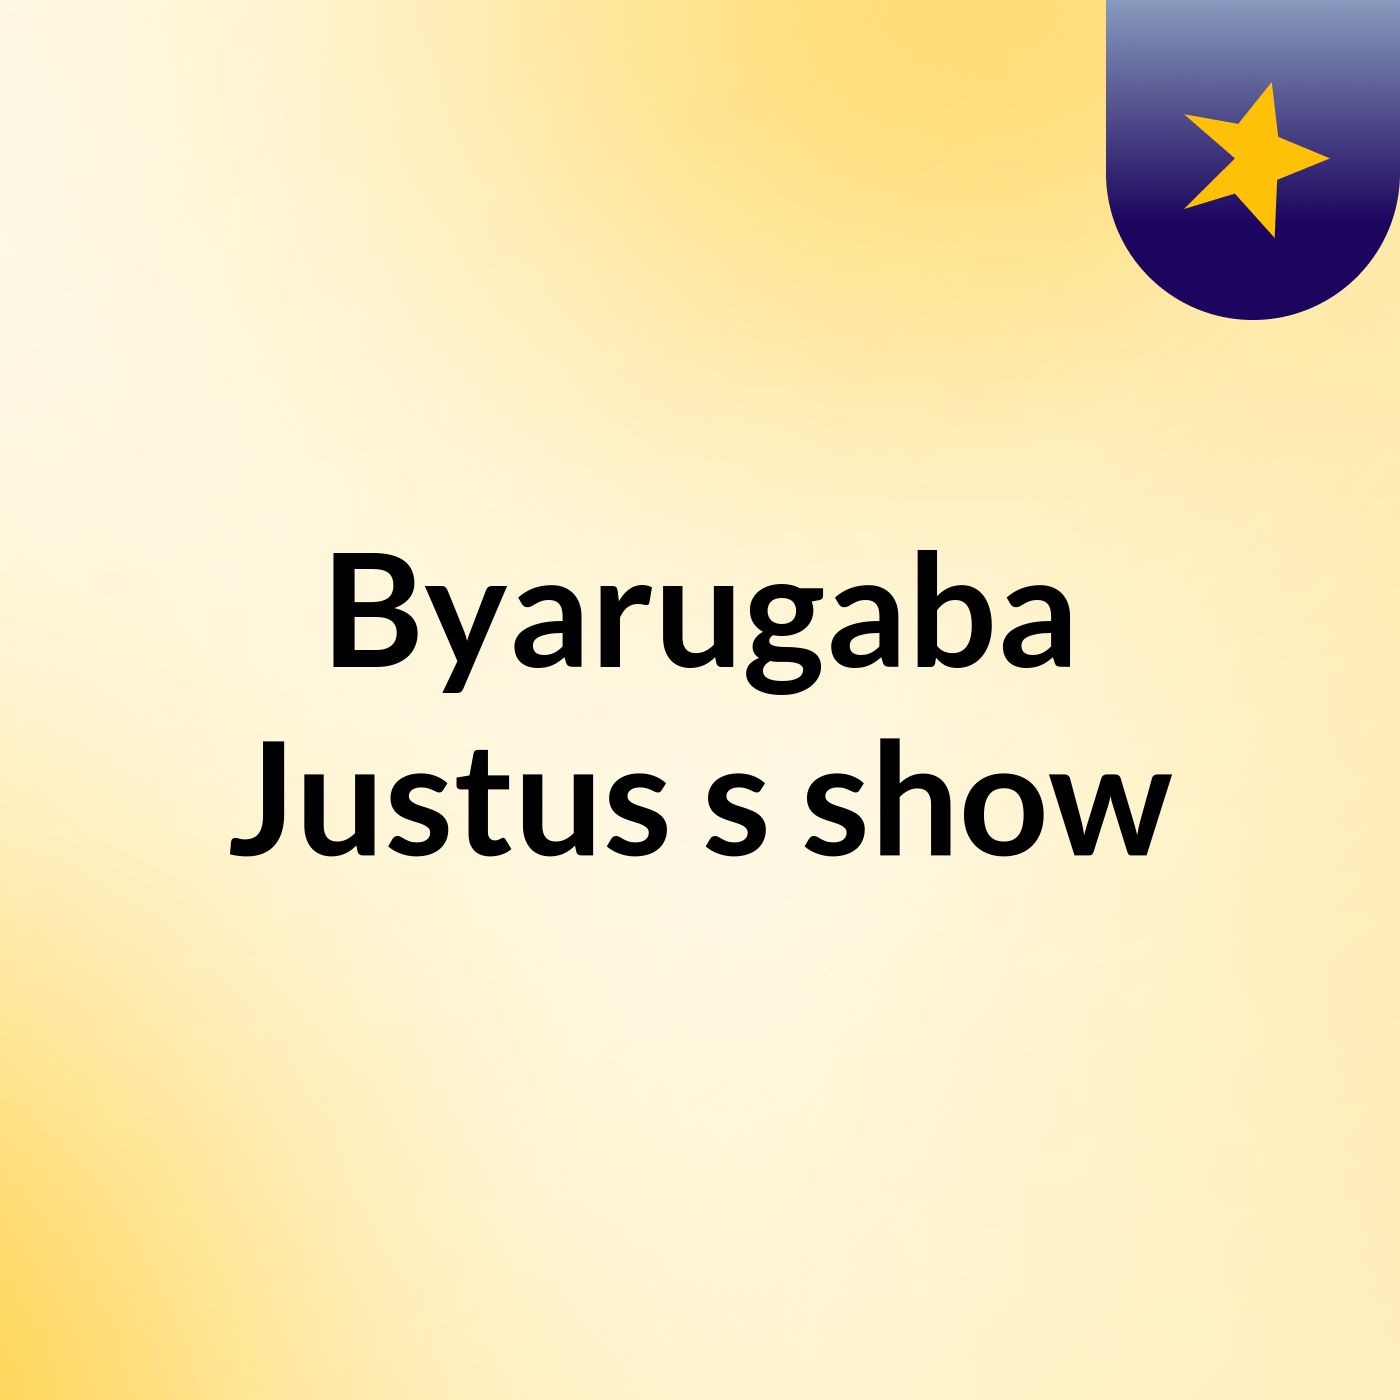 Byarugaba Justus's show